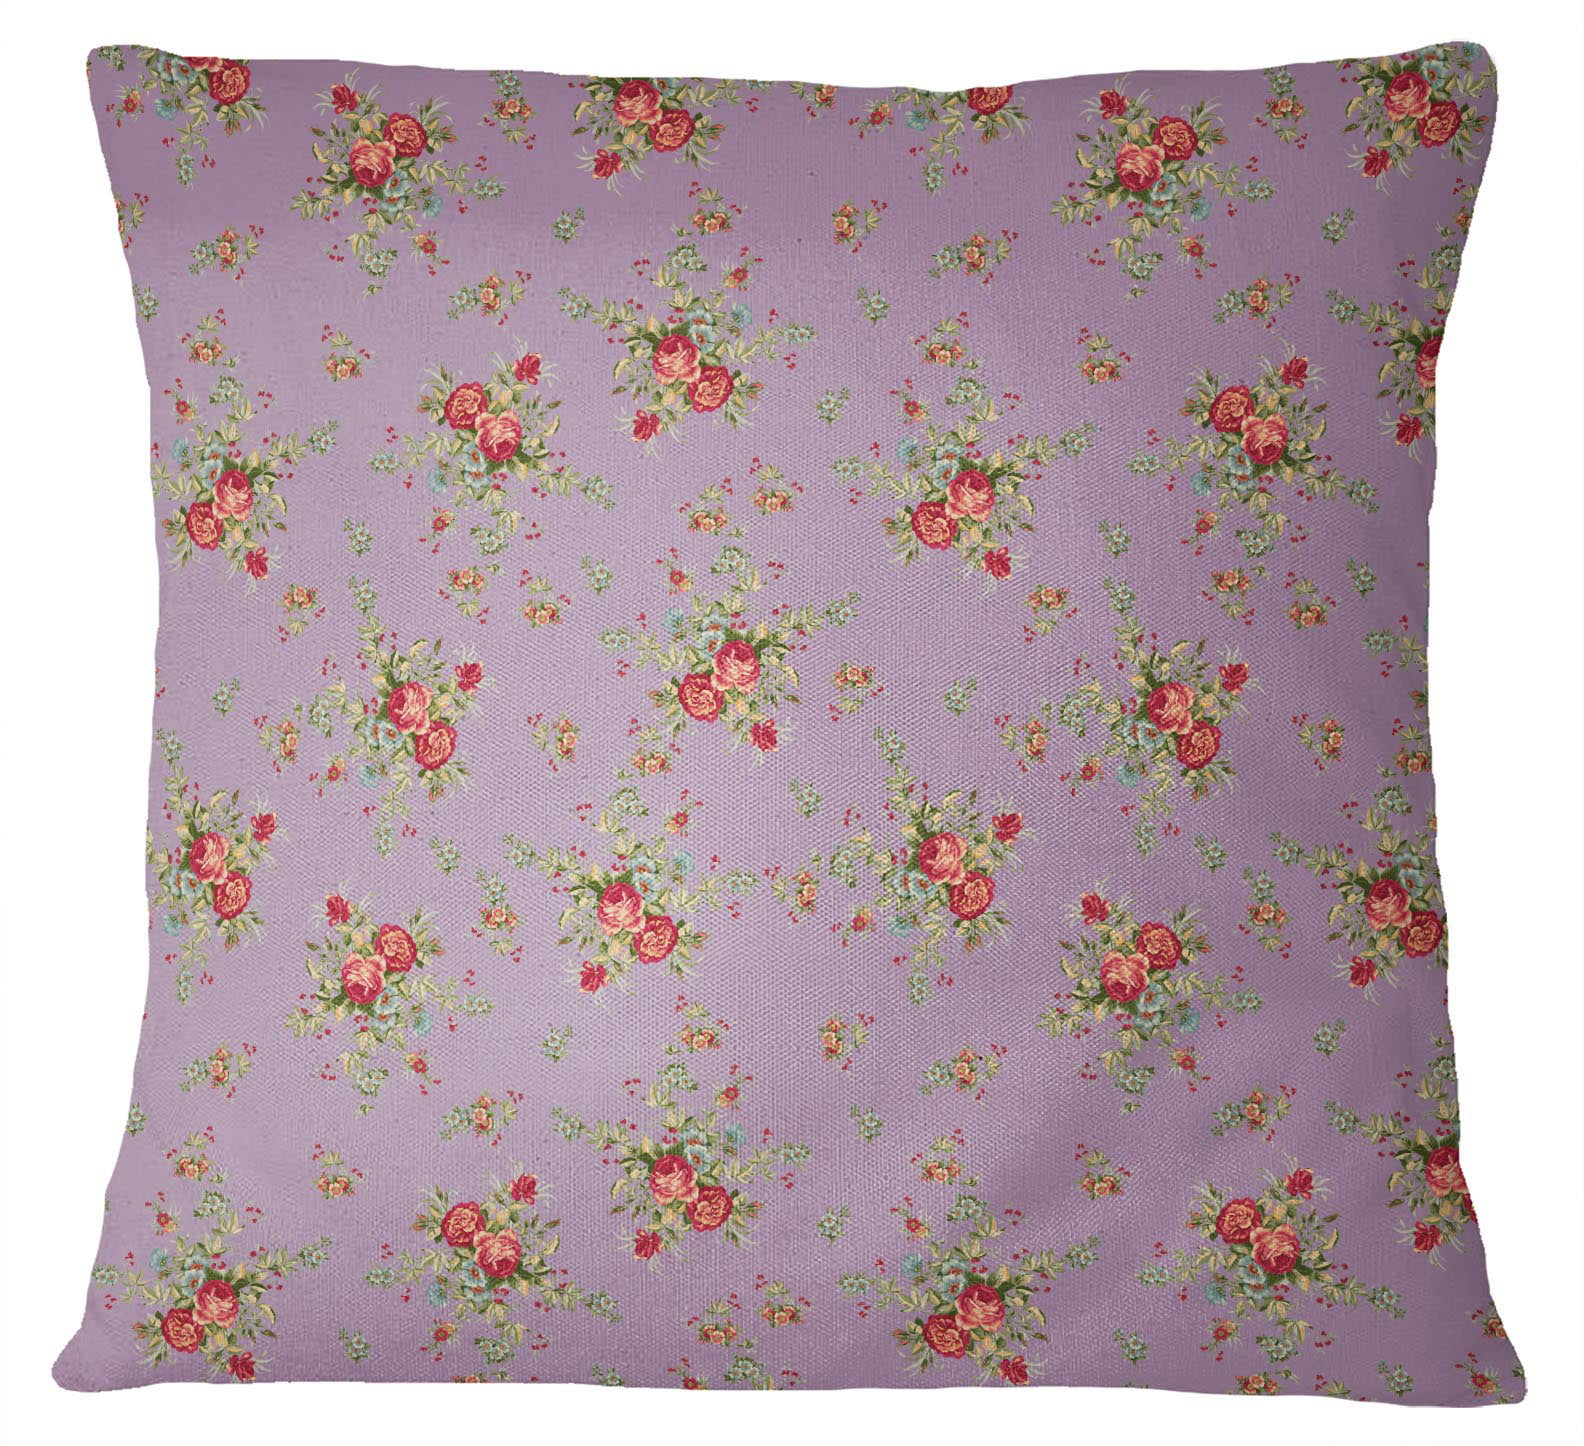 S4Sassy 1 Pair Bird & Floral Print Square Cotton Poplin Decorative Cushion Cover 